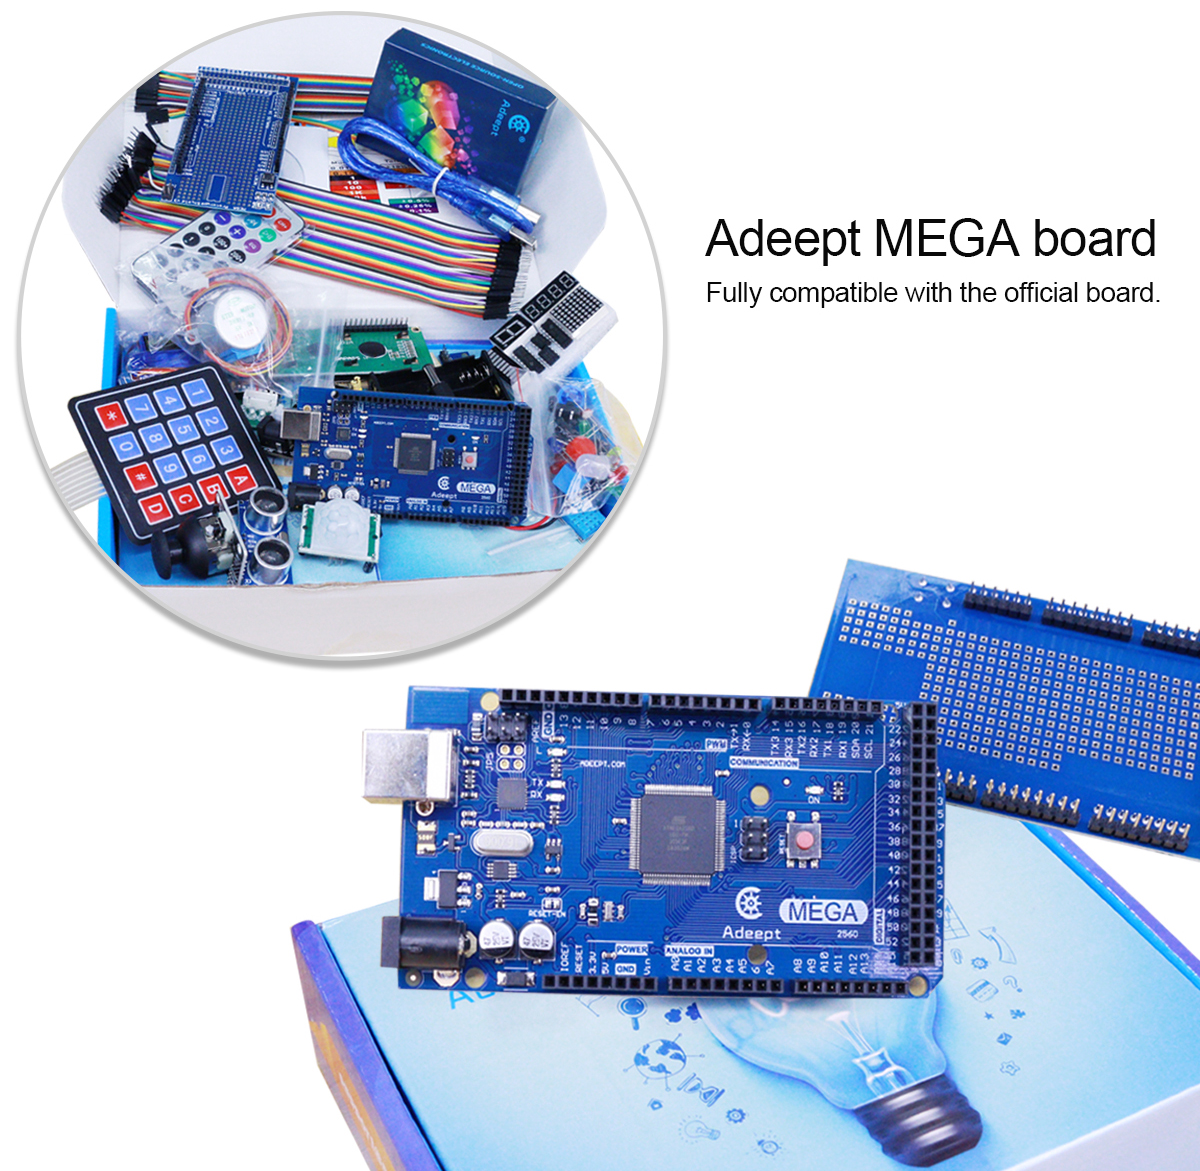 Adeept Ultimate Starter Kit for Arduino Mega2560 - Click to Enlarge